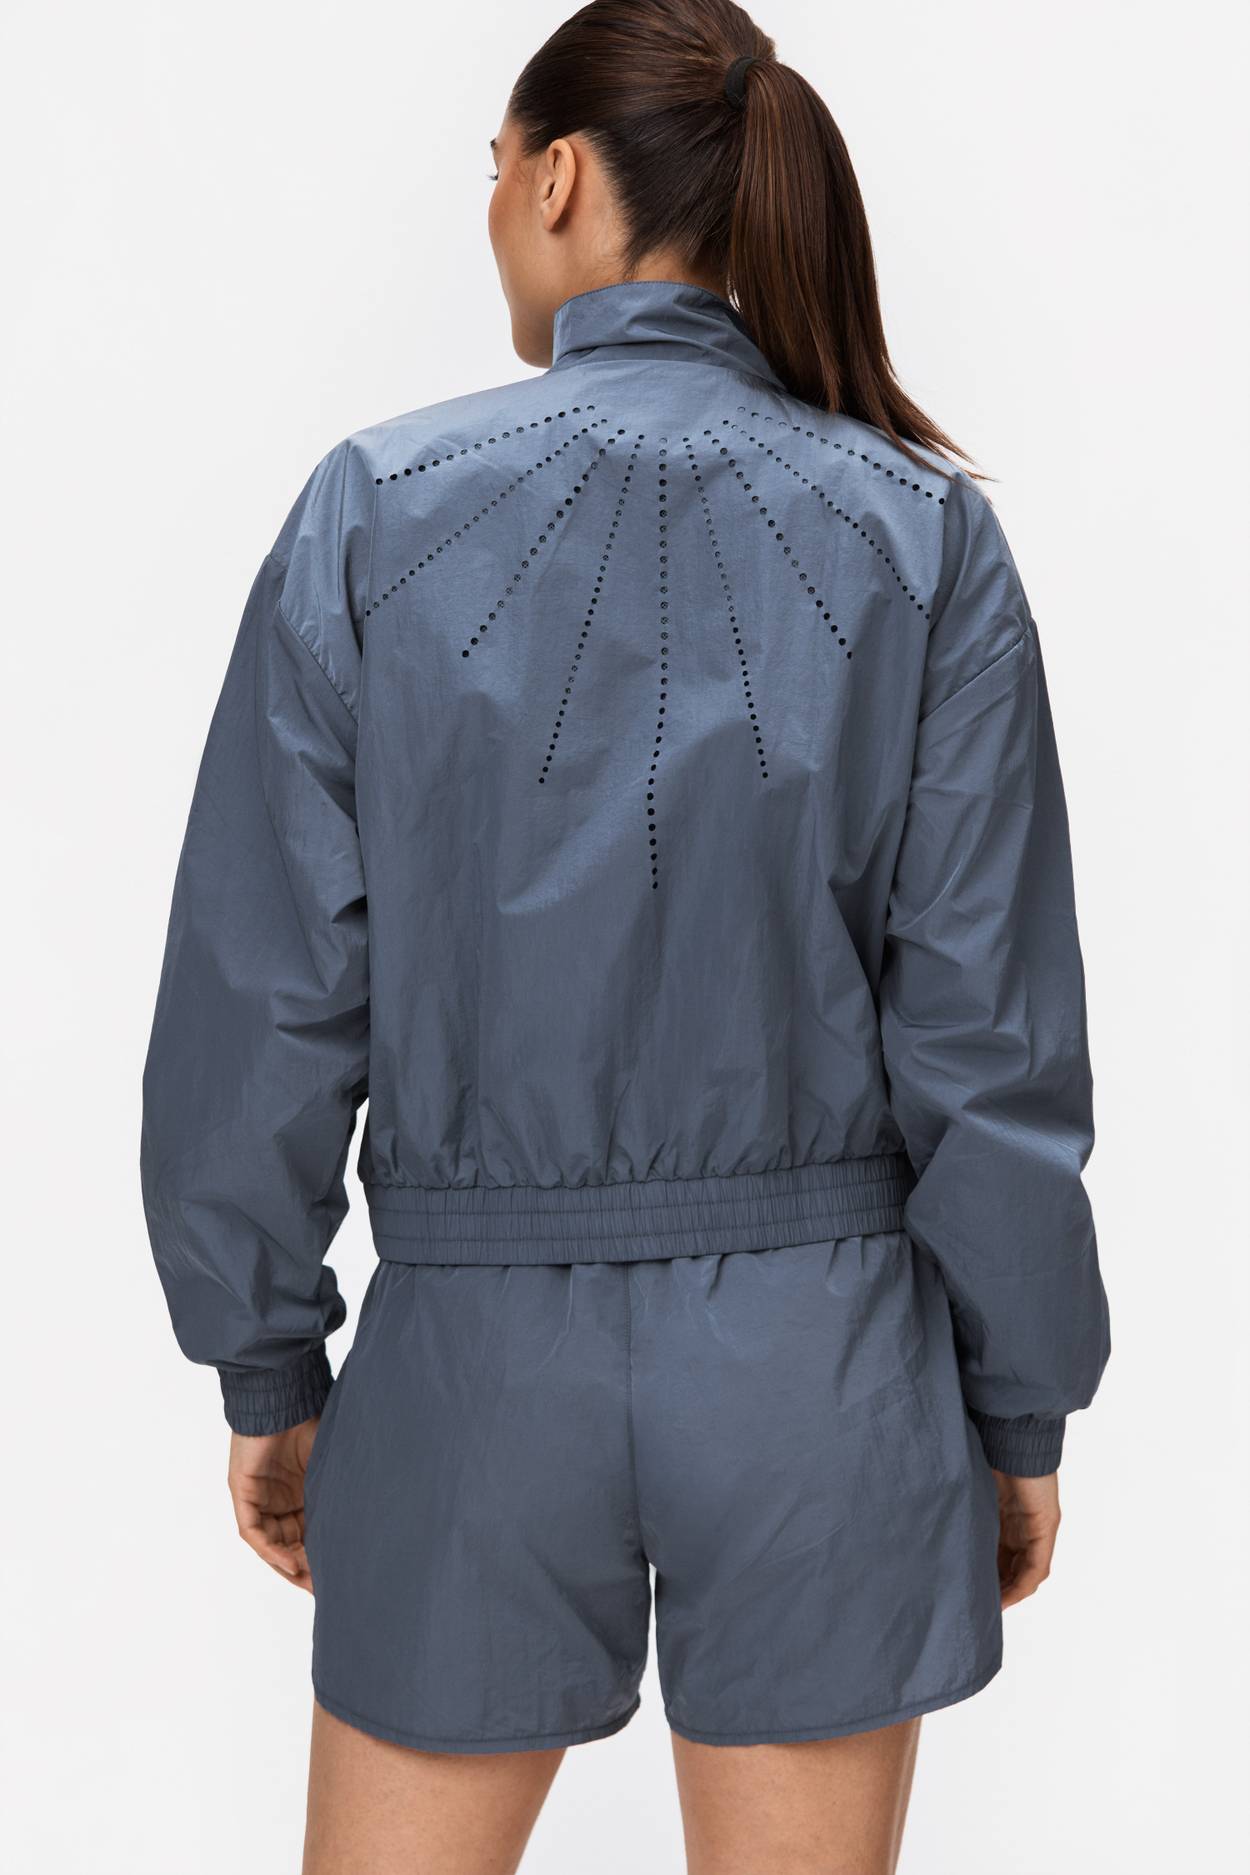 Bershka nylon reflective panel windbreaker jacket in grey